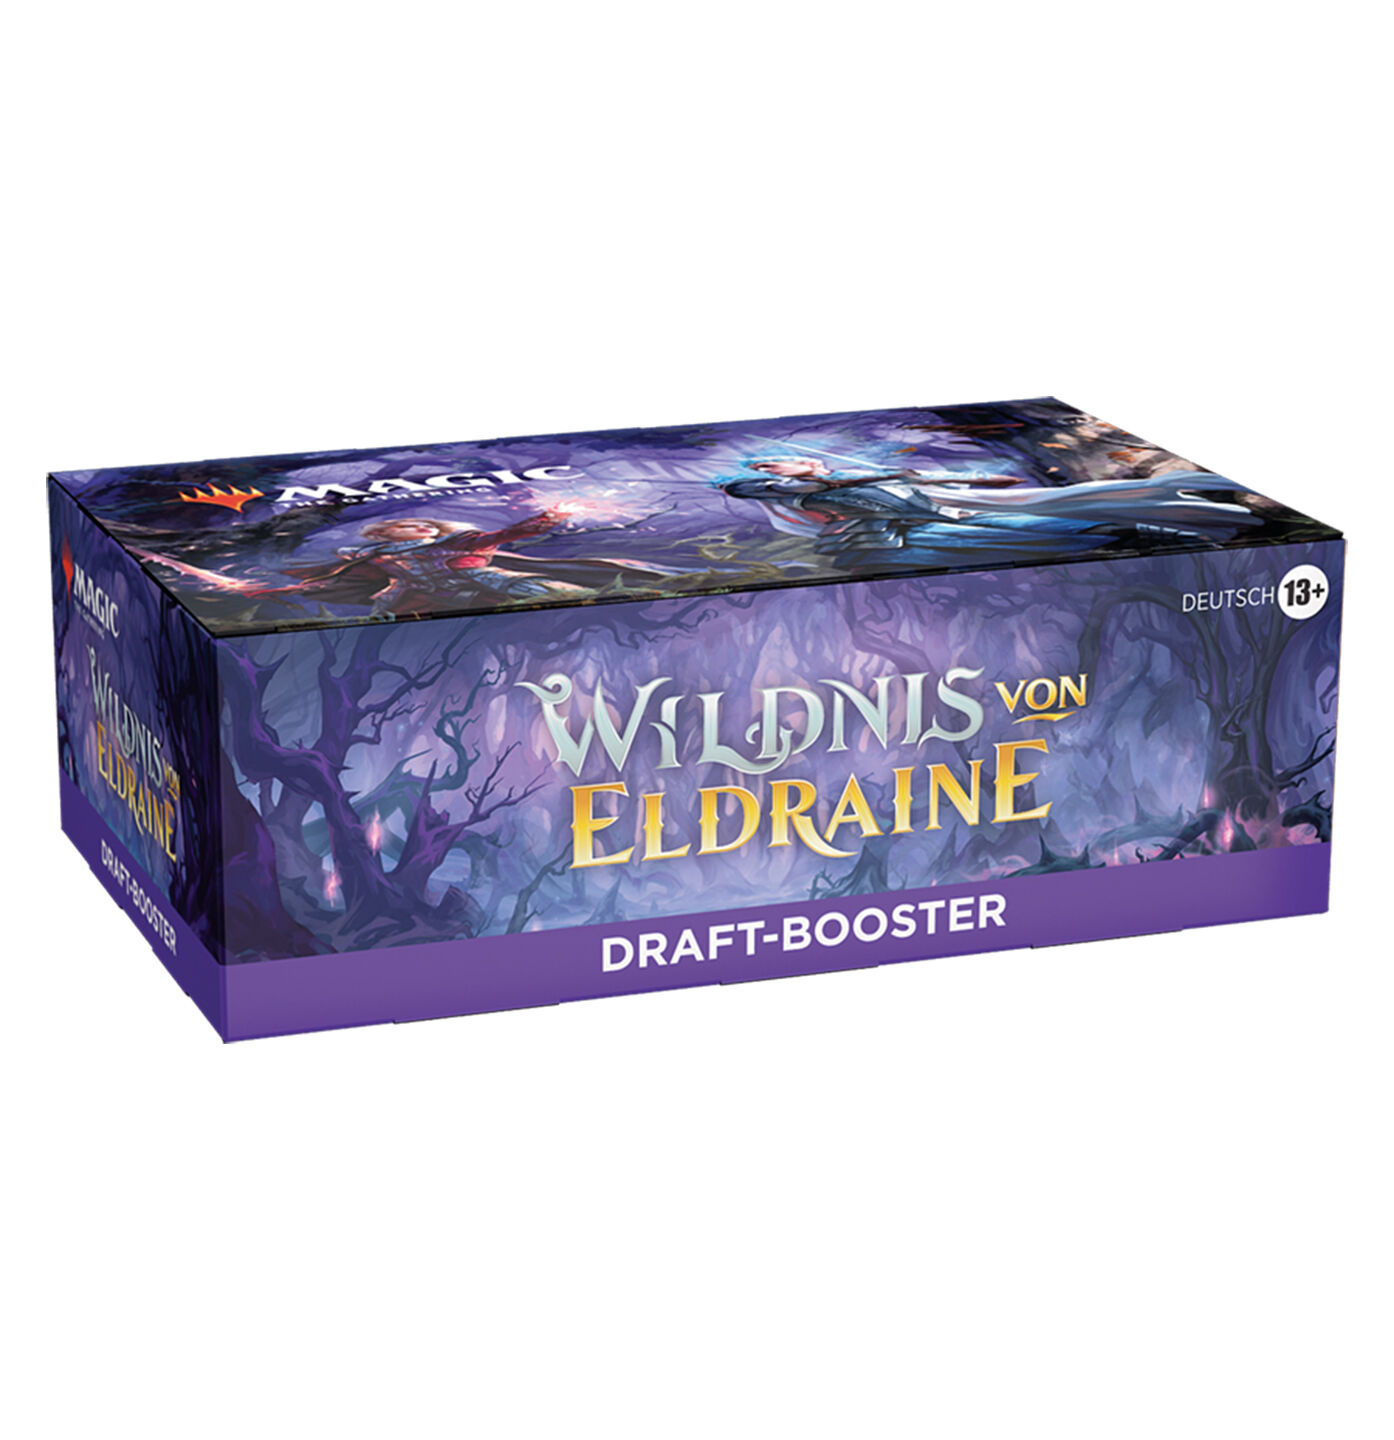 Wilds of Eldraine Draft Booster Box - Magic the Gathering - EN